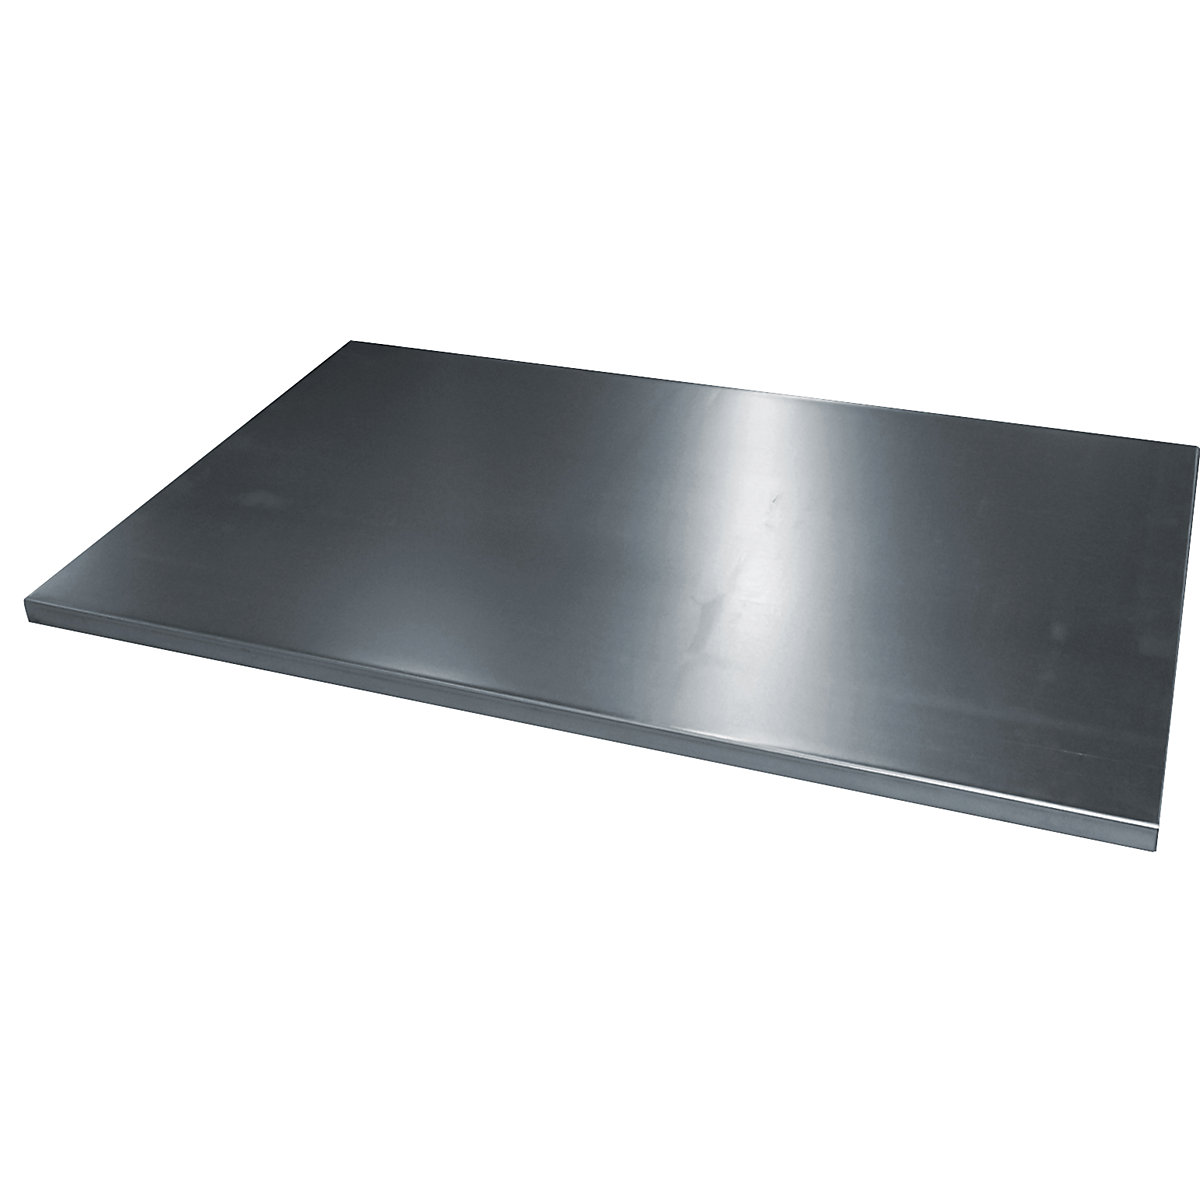 Shelf – C+P, width 930 mm, depth 600 mm